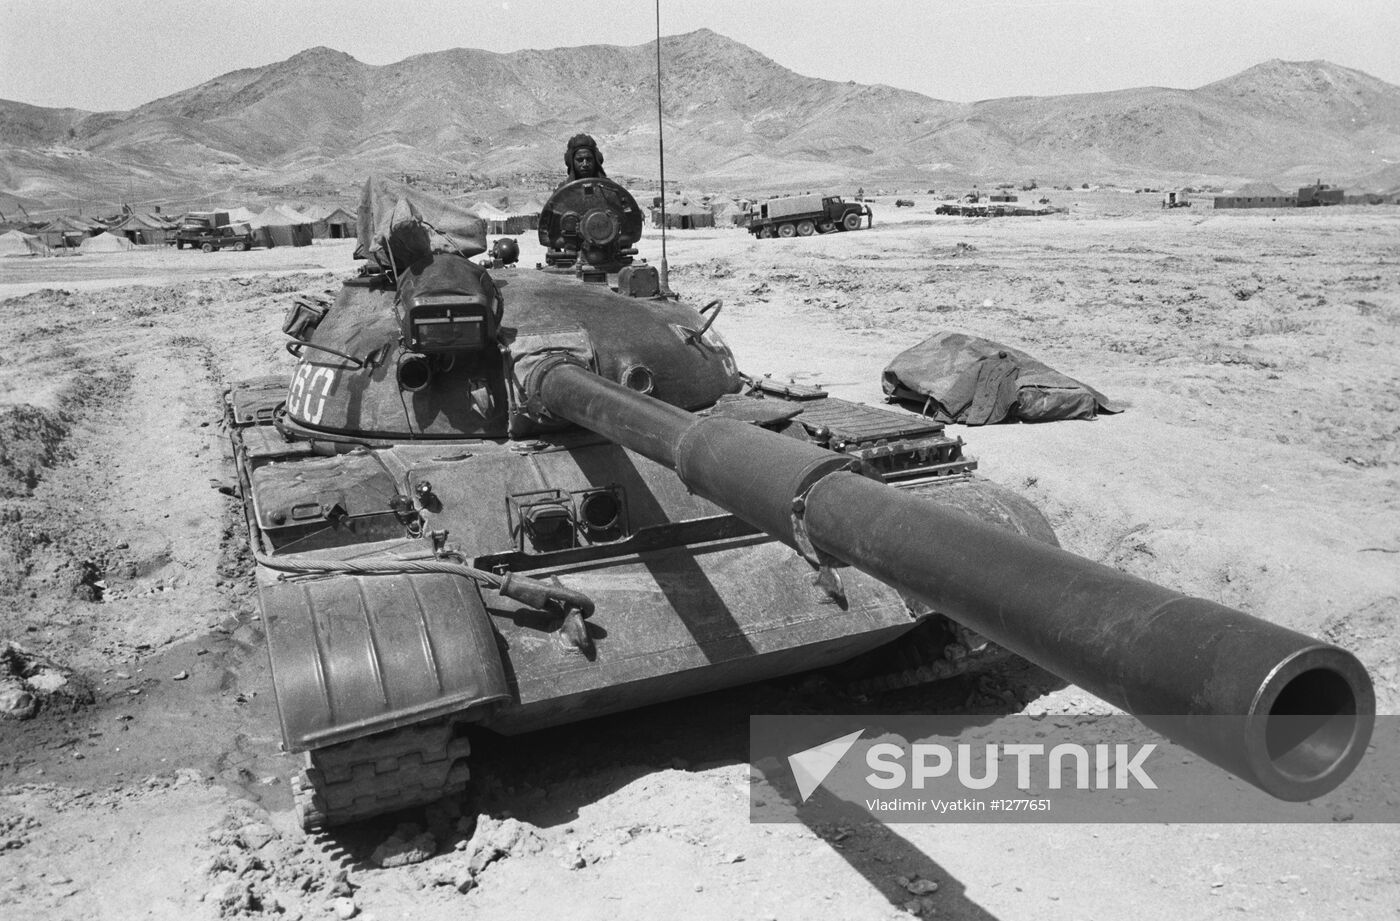 Soviet tanker in Afghanistan mountains